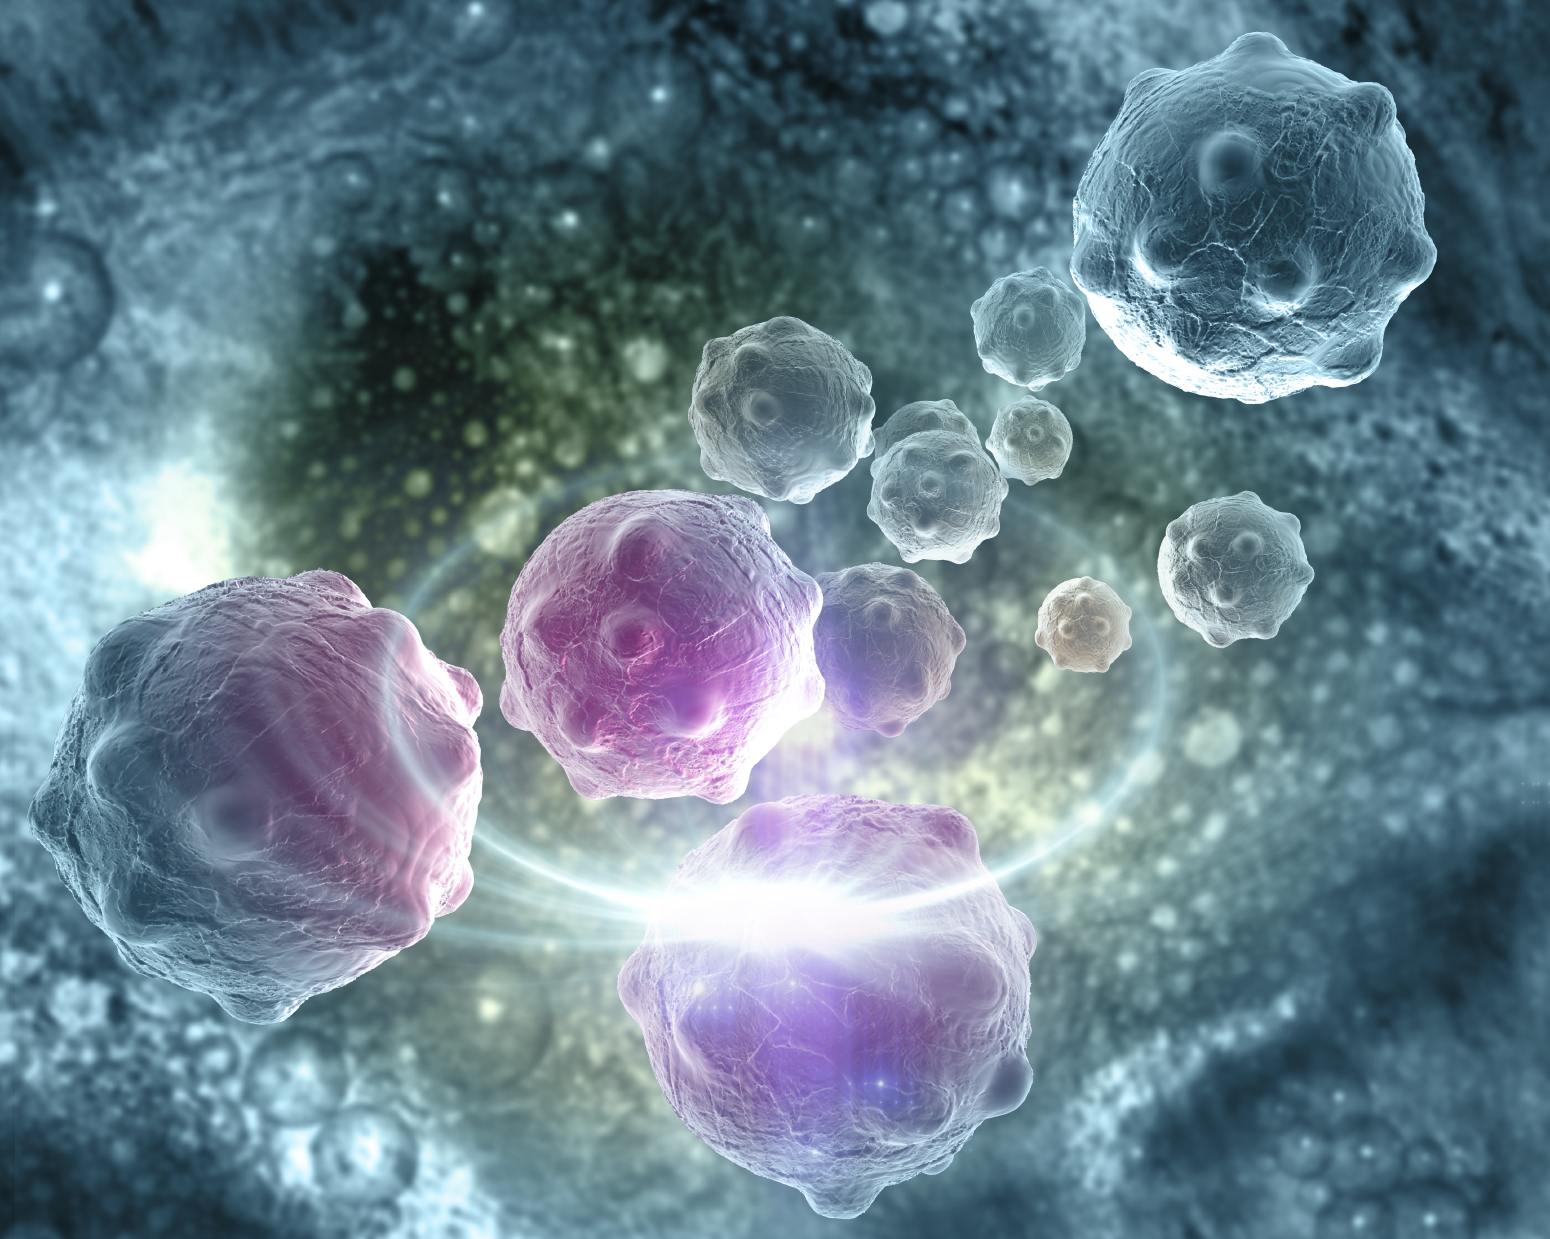 Metformin Plus Syrosingopine Effectively Combats Cancer Cells